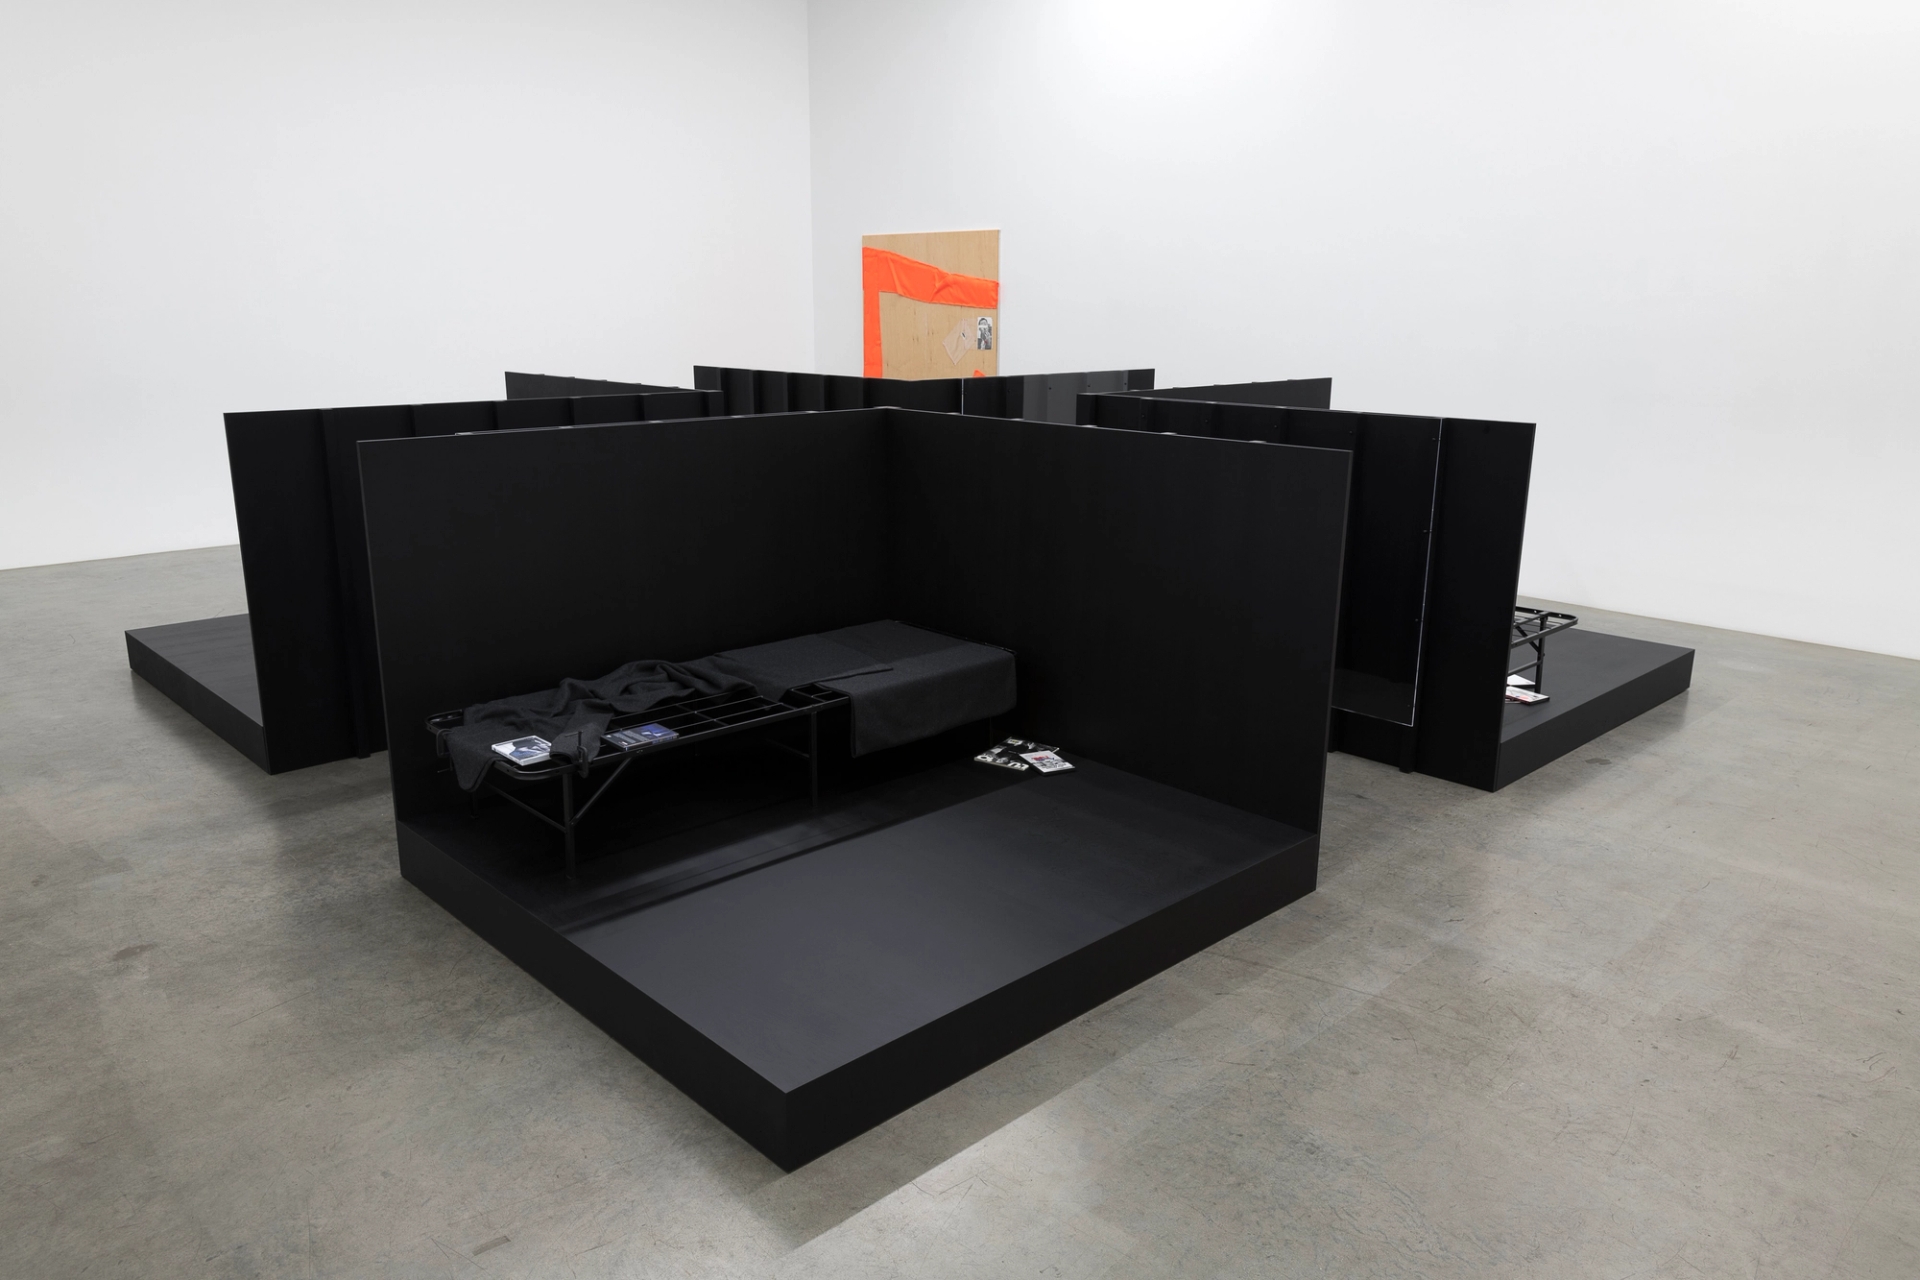 Tom Burr, Compressions, 2022, Galerie Neu
Courtesy the artist and Galerie Neu